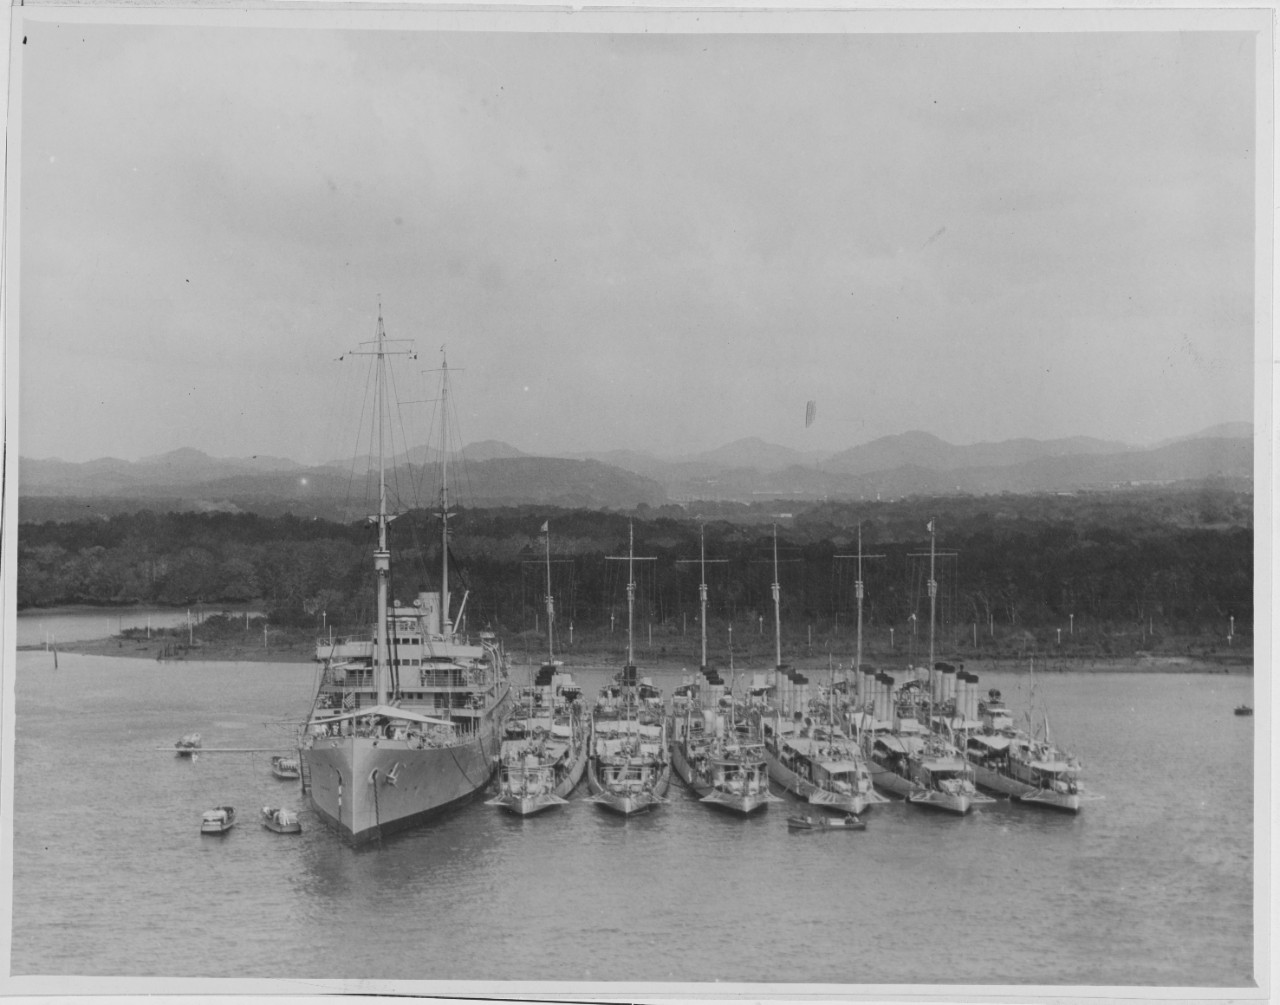 USS WHITNEY (AD-4)